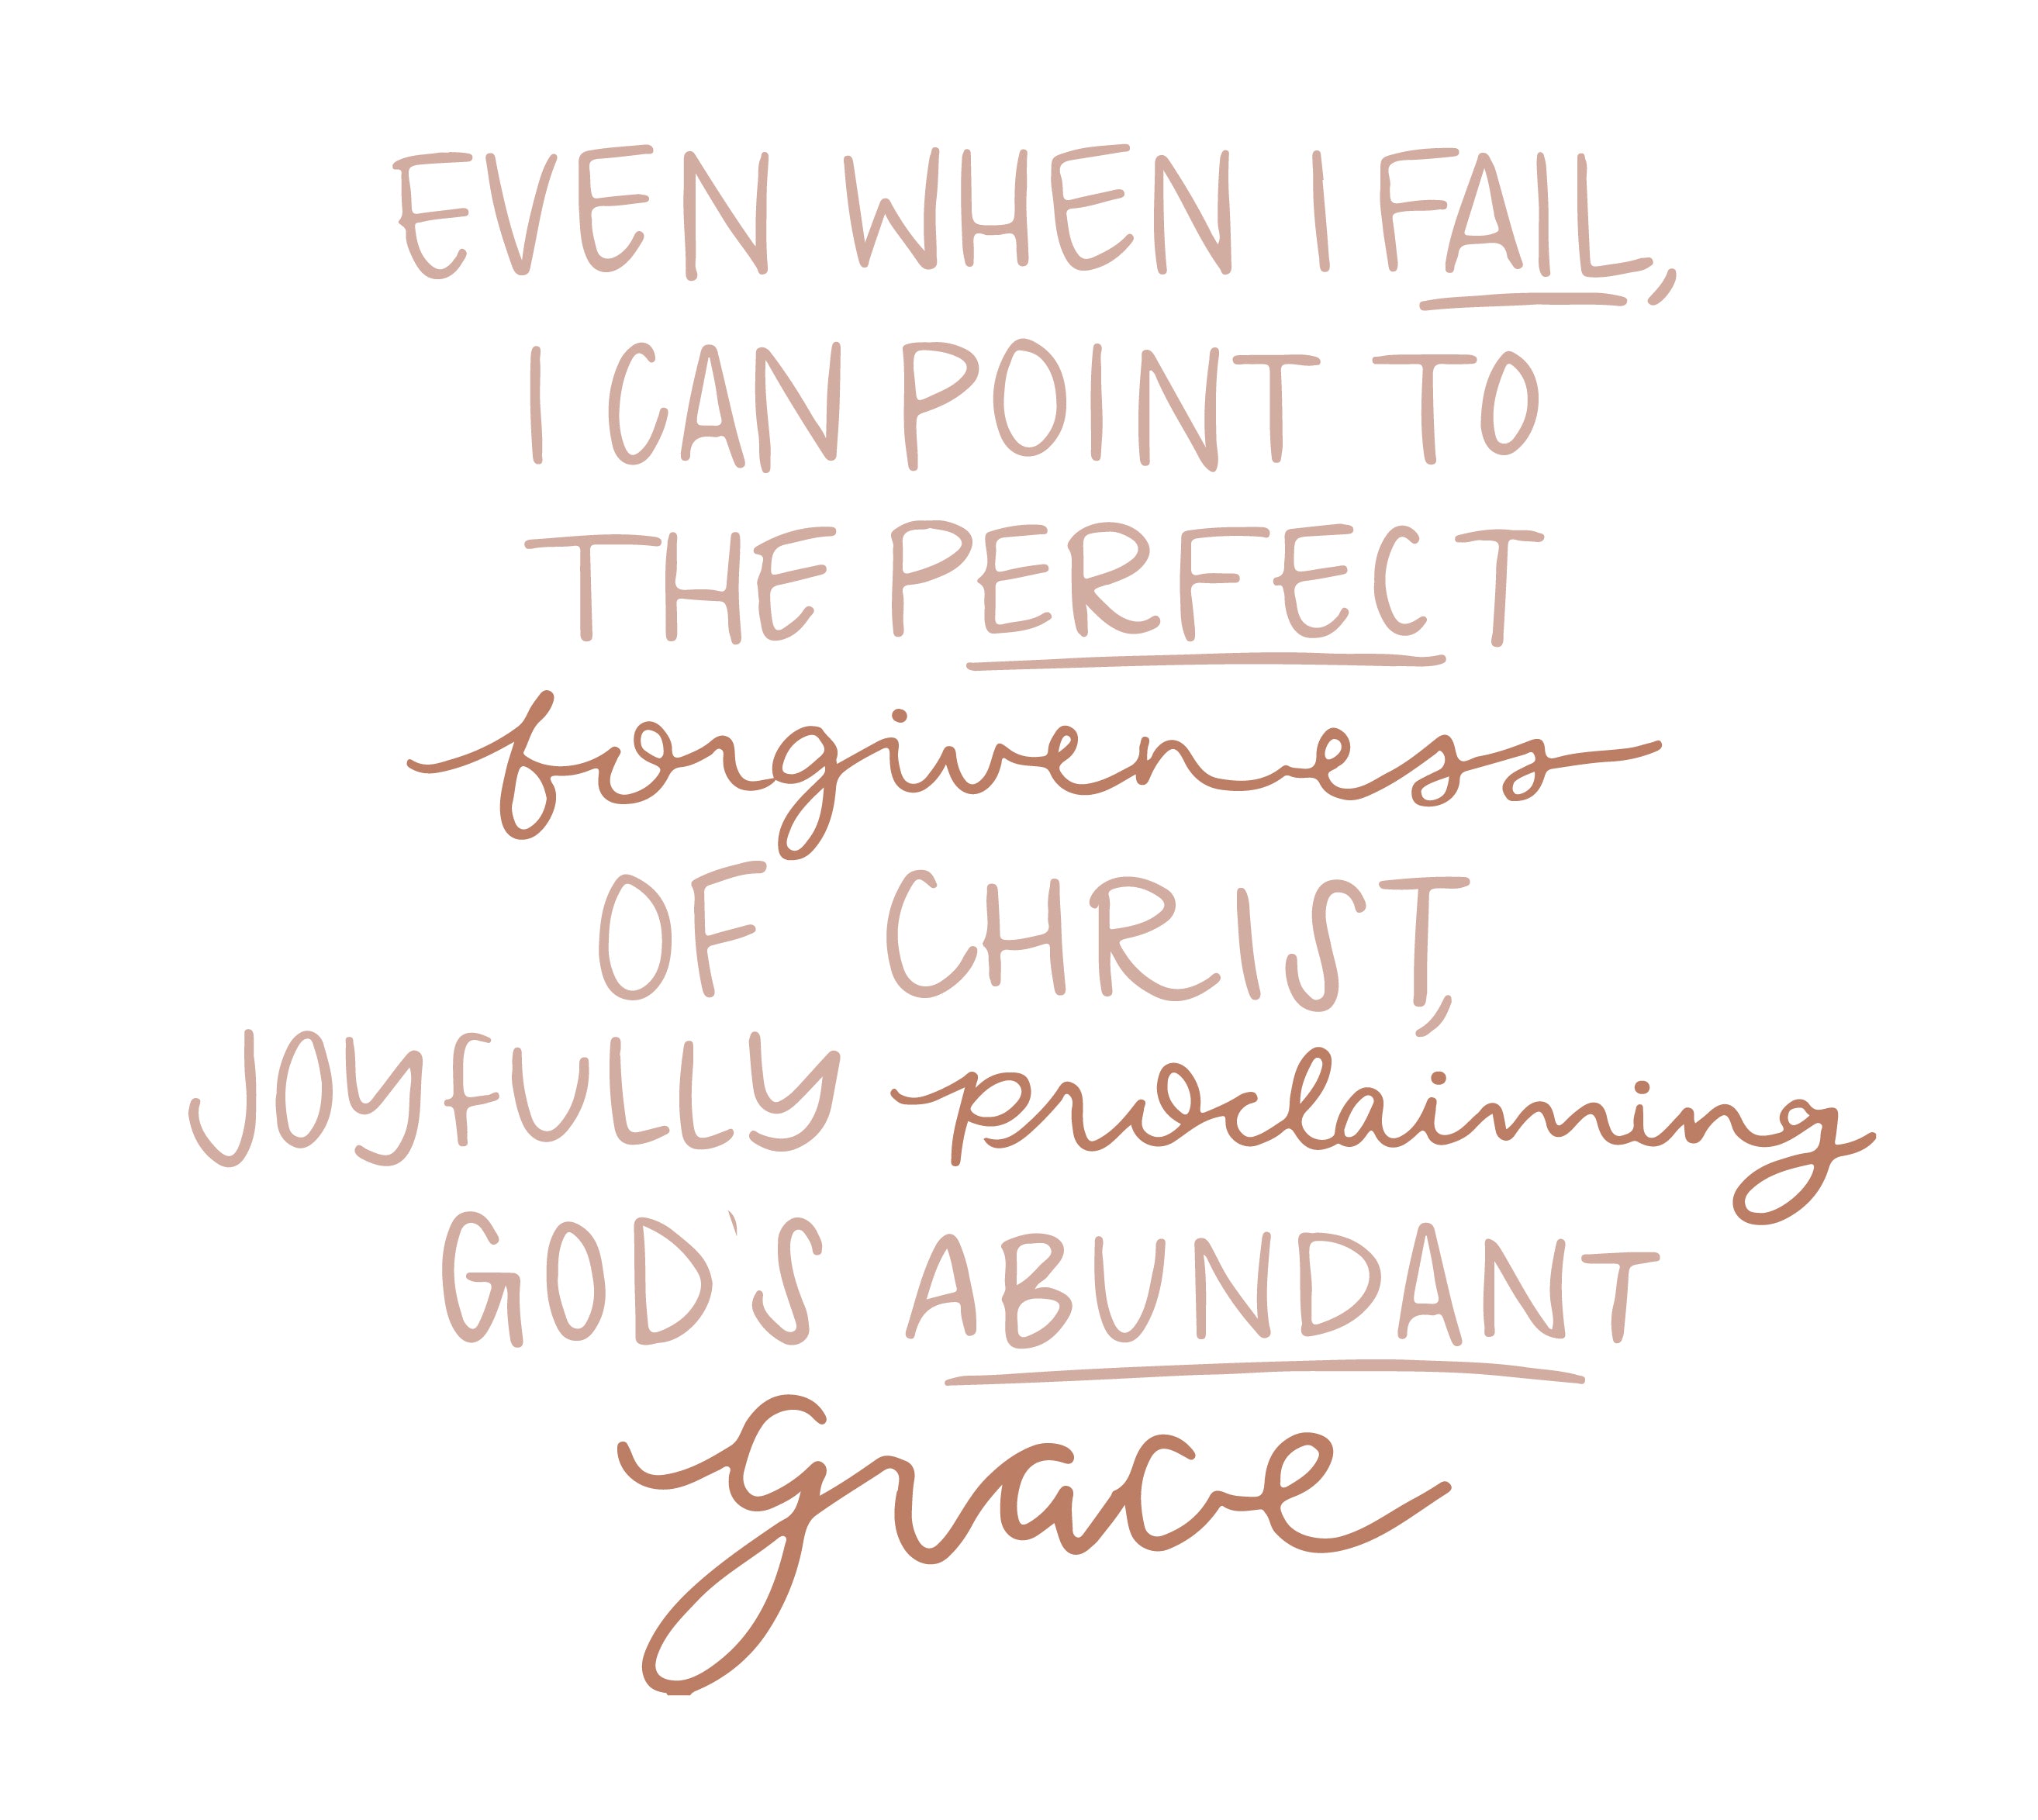 Even when I fail, I can point to Christ’s forgiveness and proclaim God’s abundant grace | TDGC